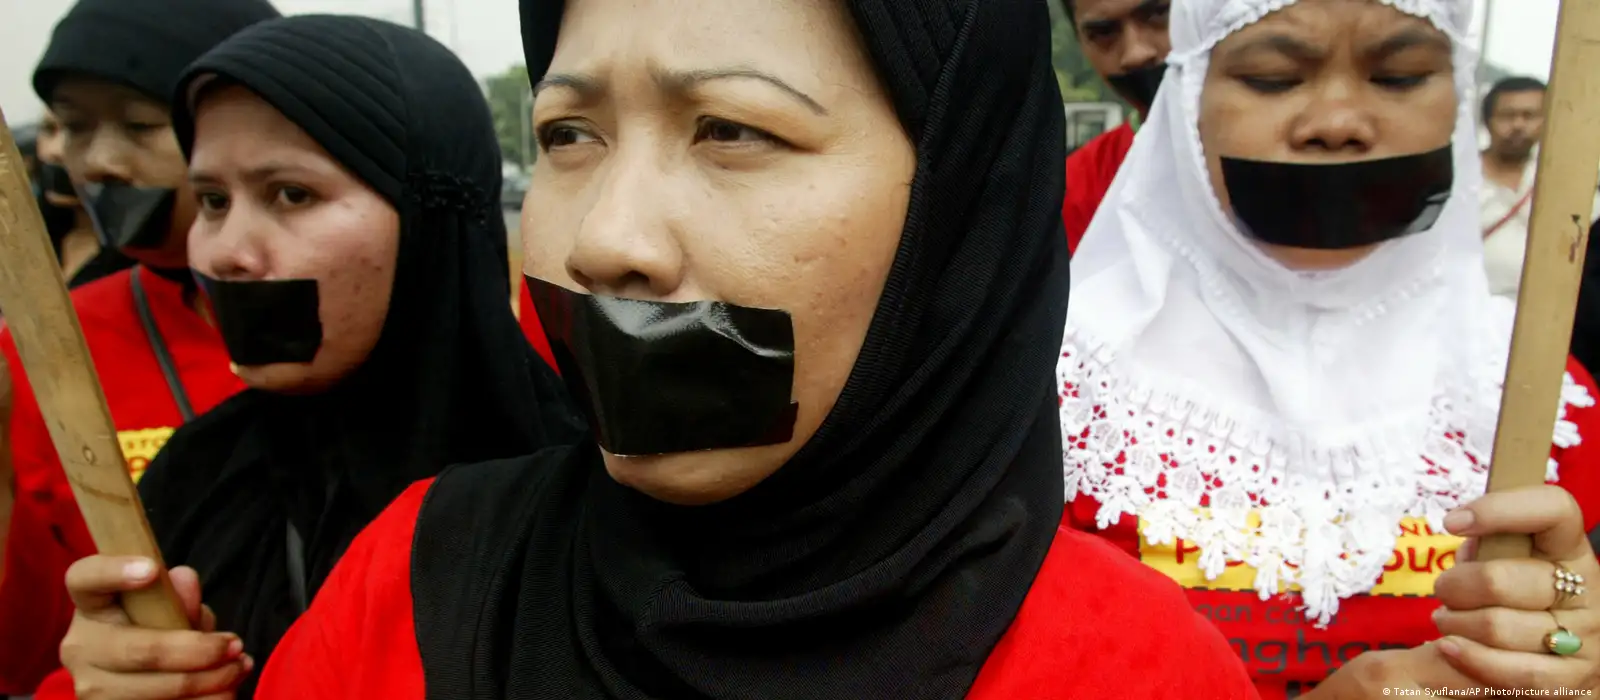 Smallgarlssex - Indonesia fights violence against women â€“ DW â€“ 04/29/2022